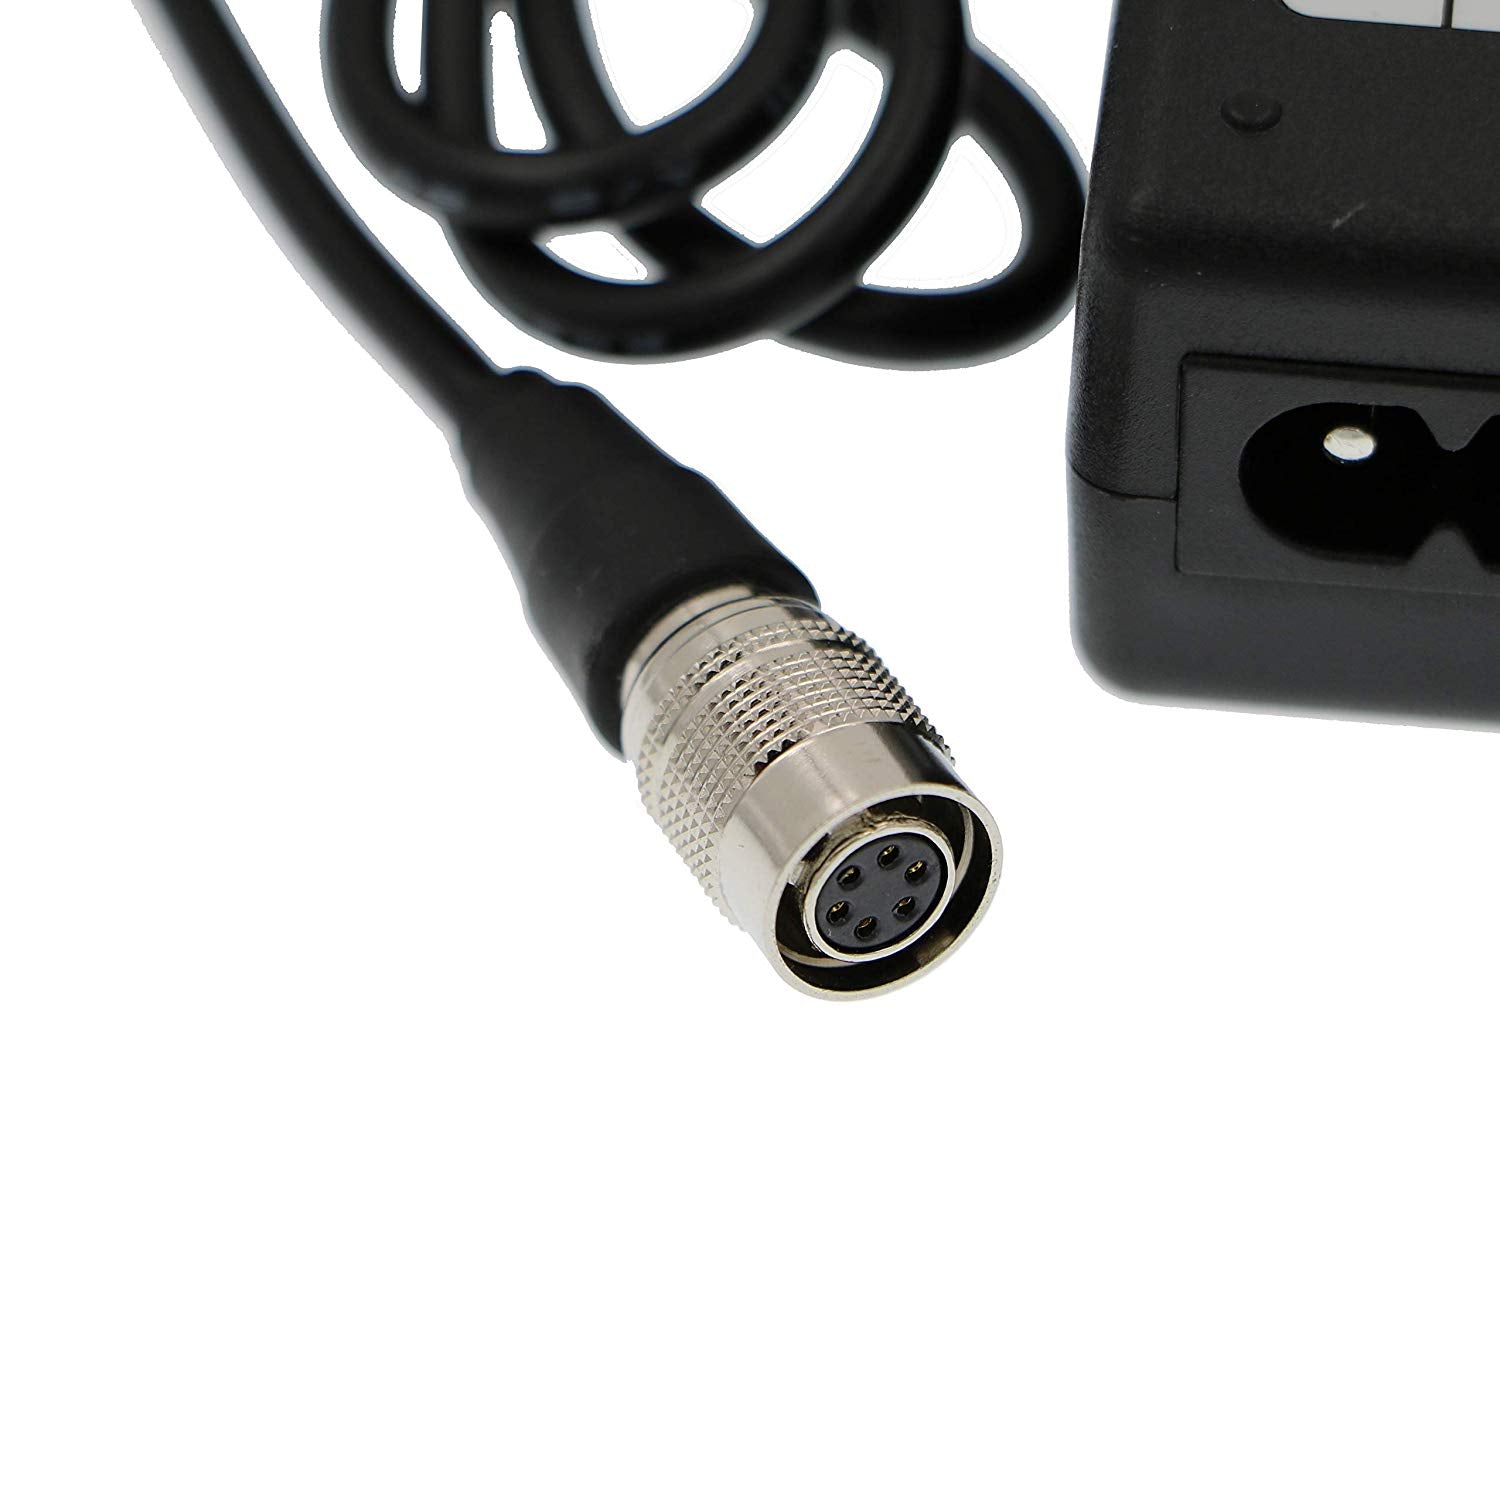 Alvin's Cables 110-240 V Netzteil mit 12 V Hirose 6 Pin Buchse Anschlusskabel für Machine Vision Basler Kameras